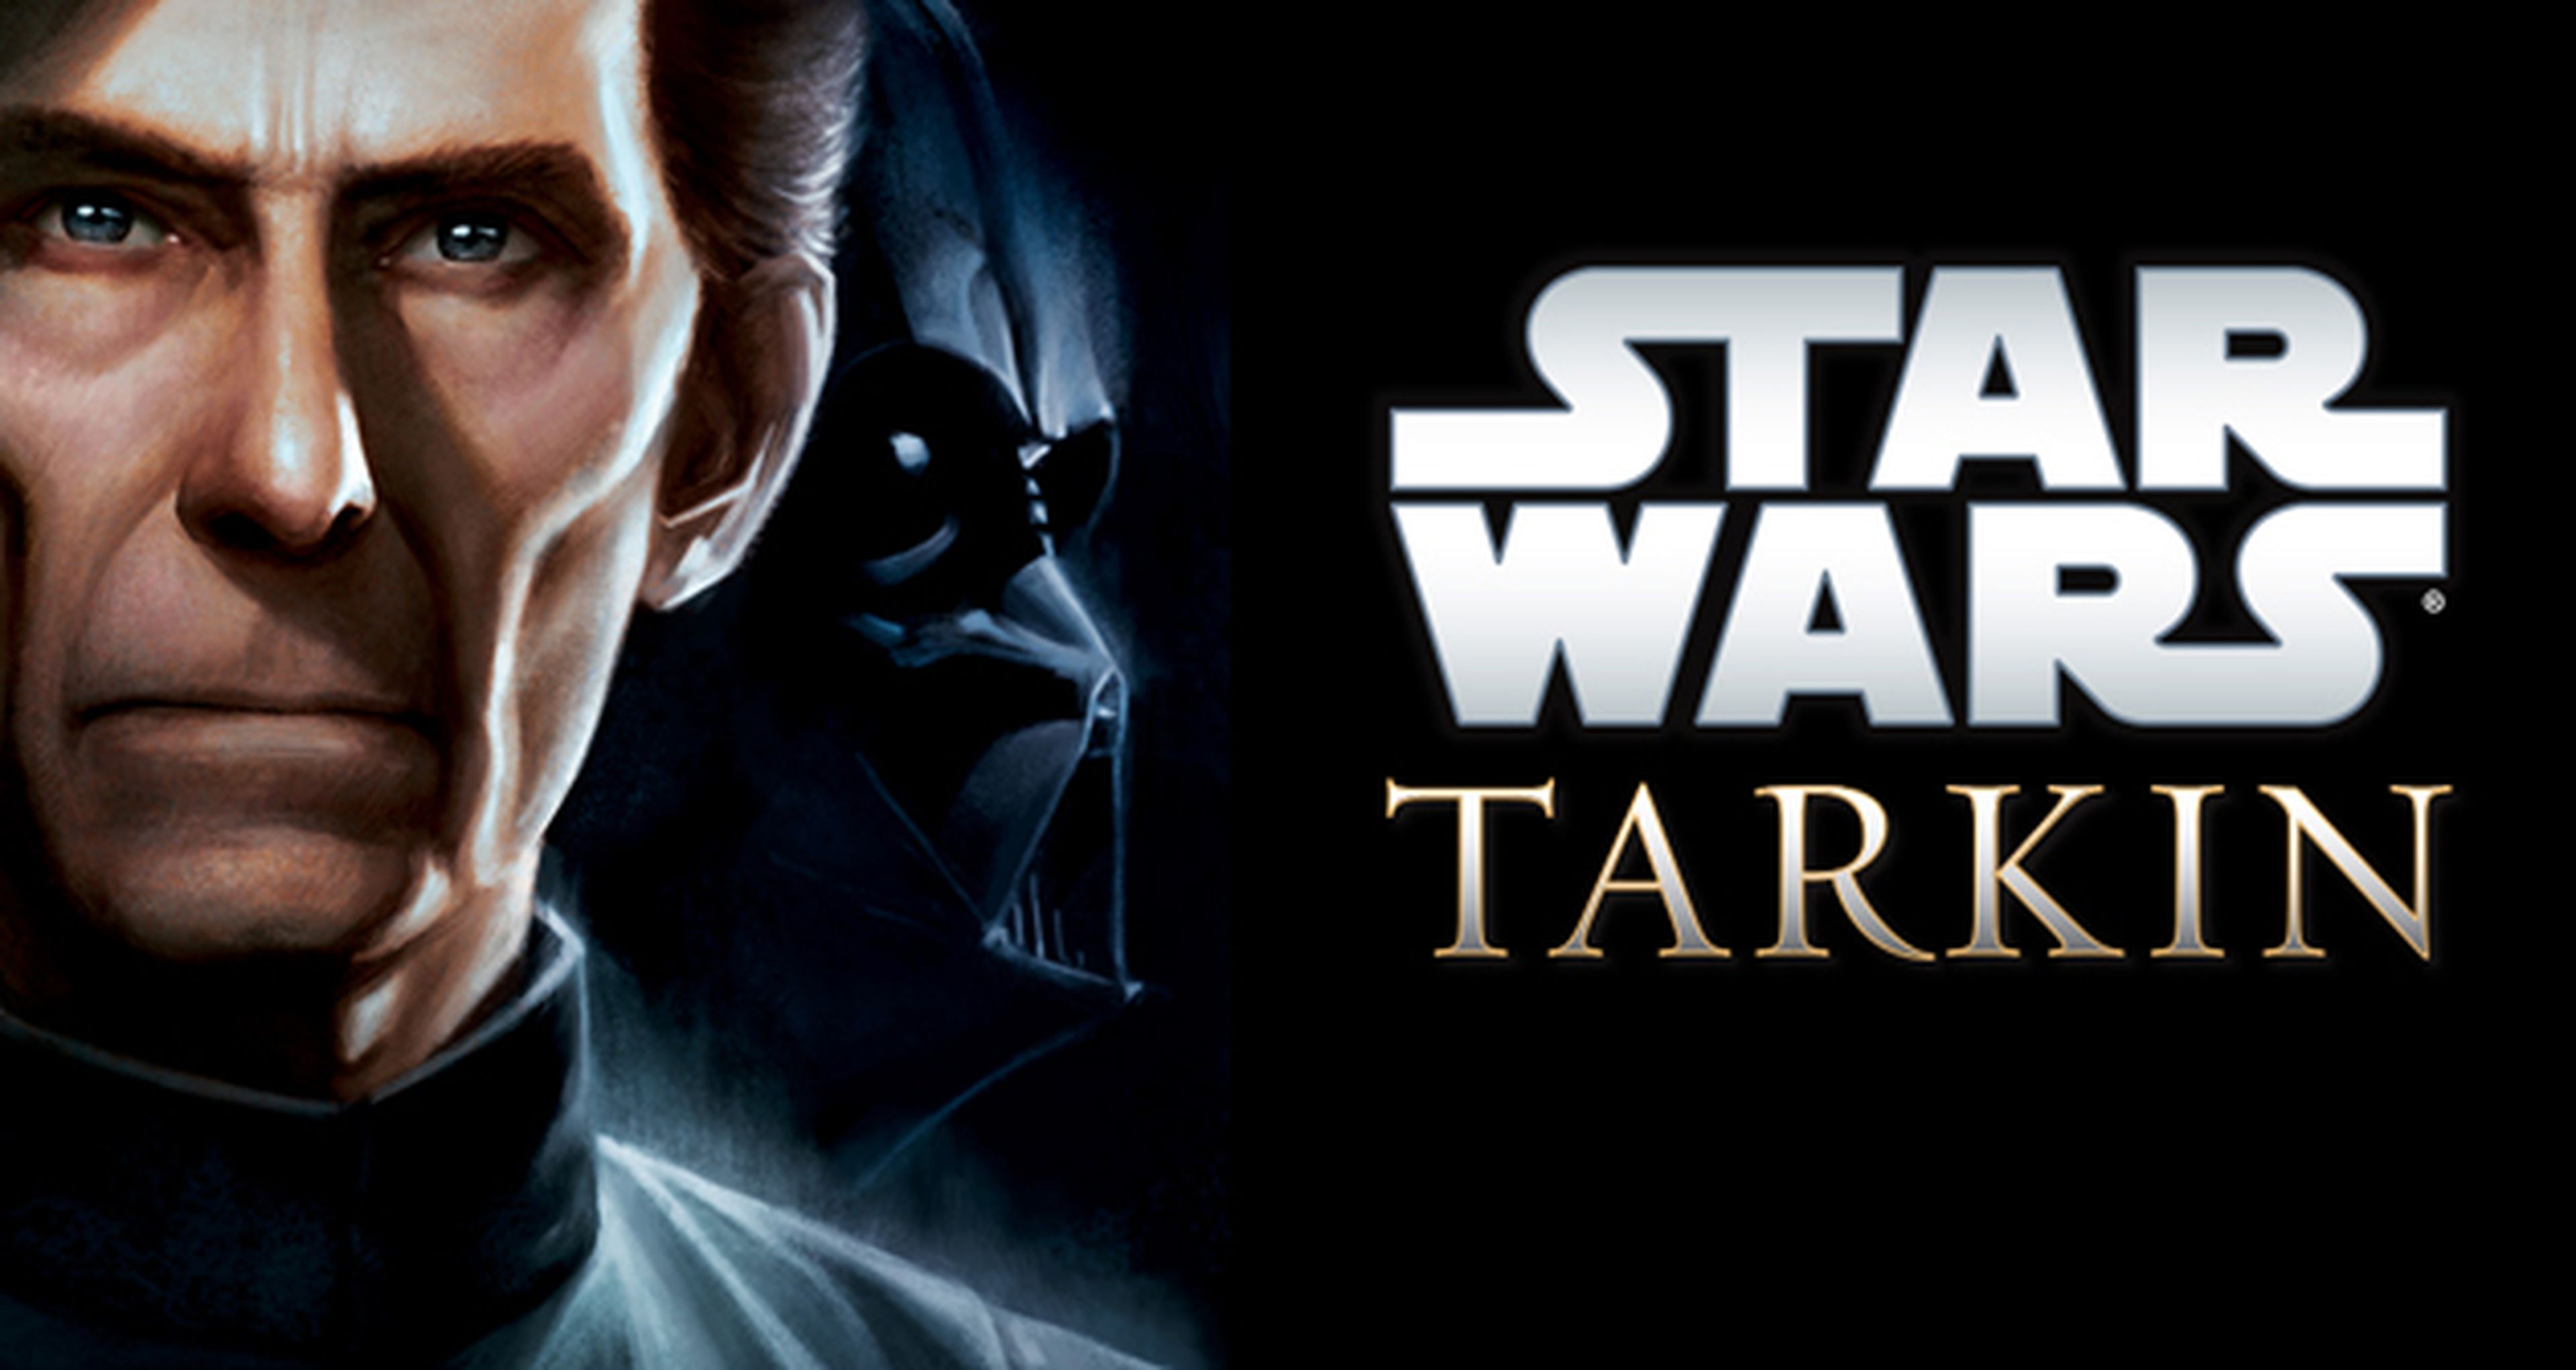 Star Wars - Planeta Cómic editara Poe Dameron, Anakin y Obi Wan, Tarkin y ¡mucho mas!